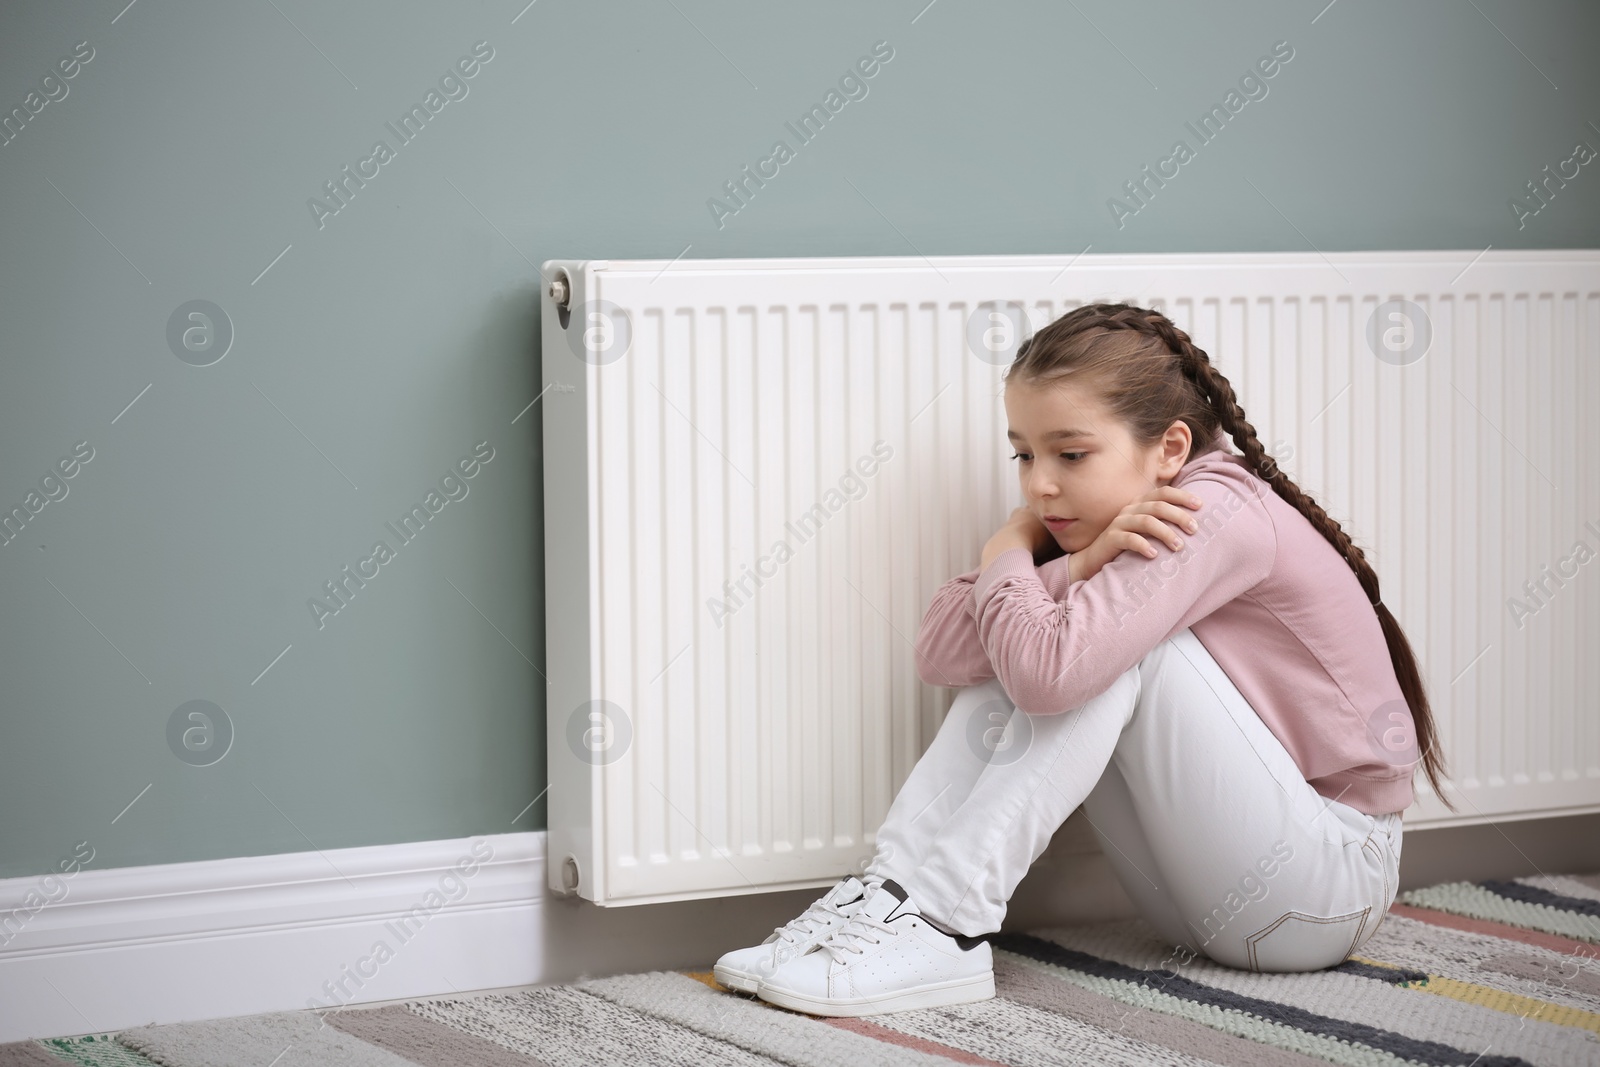 Photo of Sad little girl suffering from cold on floor near radiator